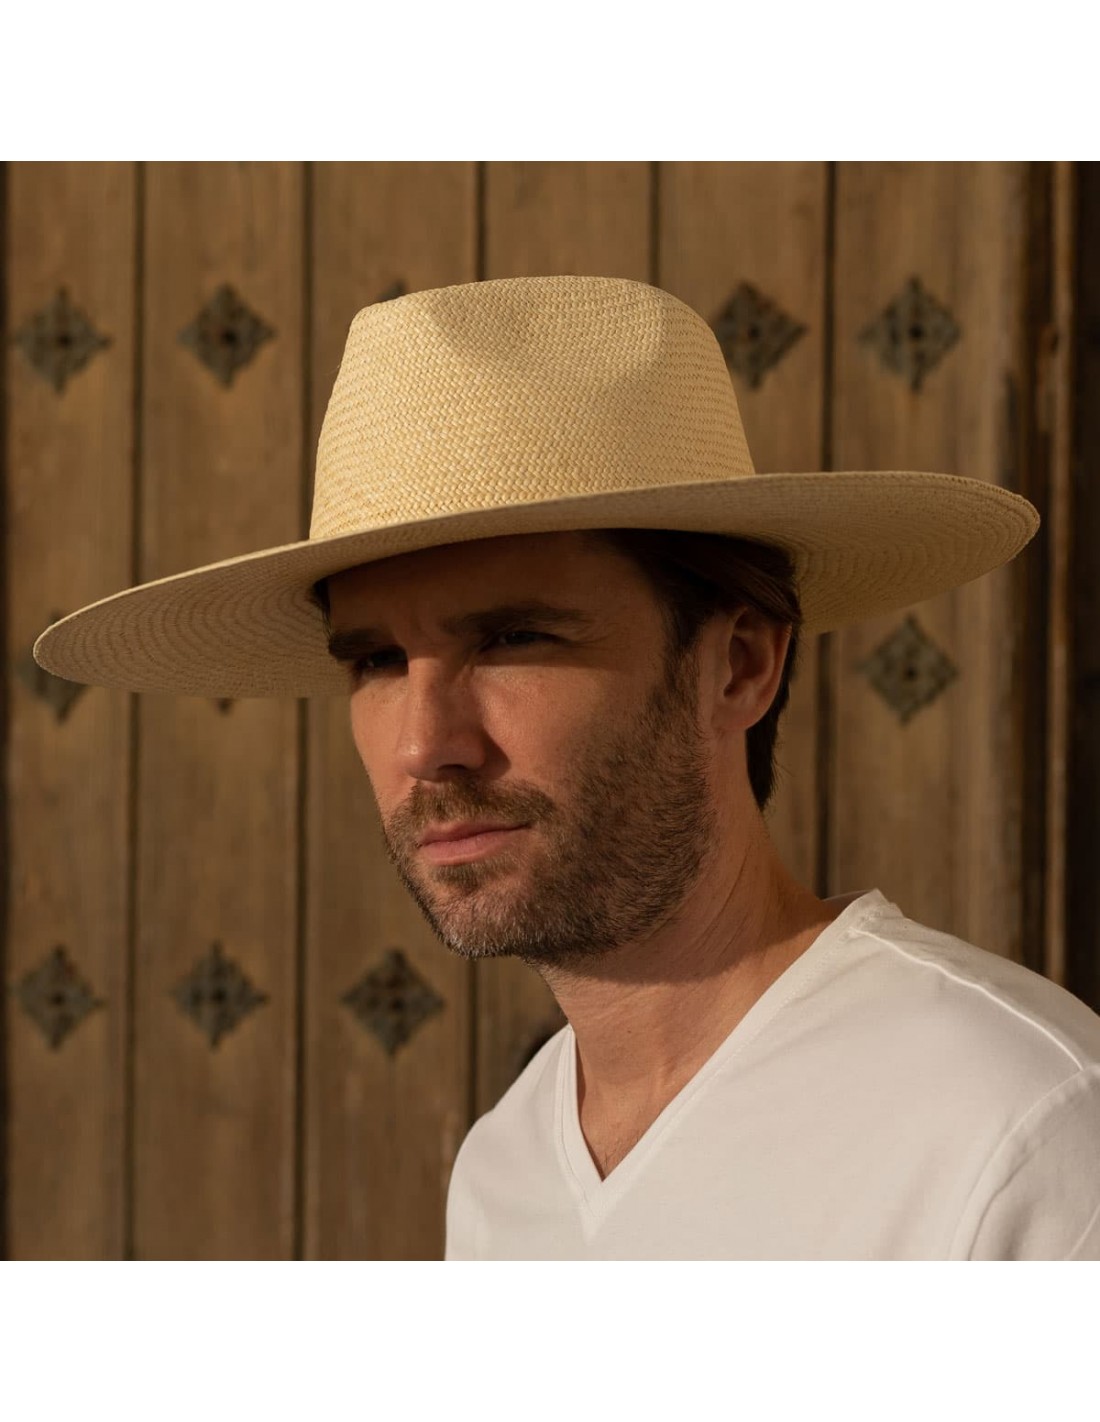 Shop Large Brim Panama Hat Natural Color for Men - Panama Hats UK for Men